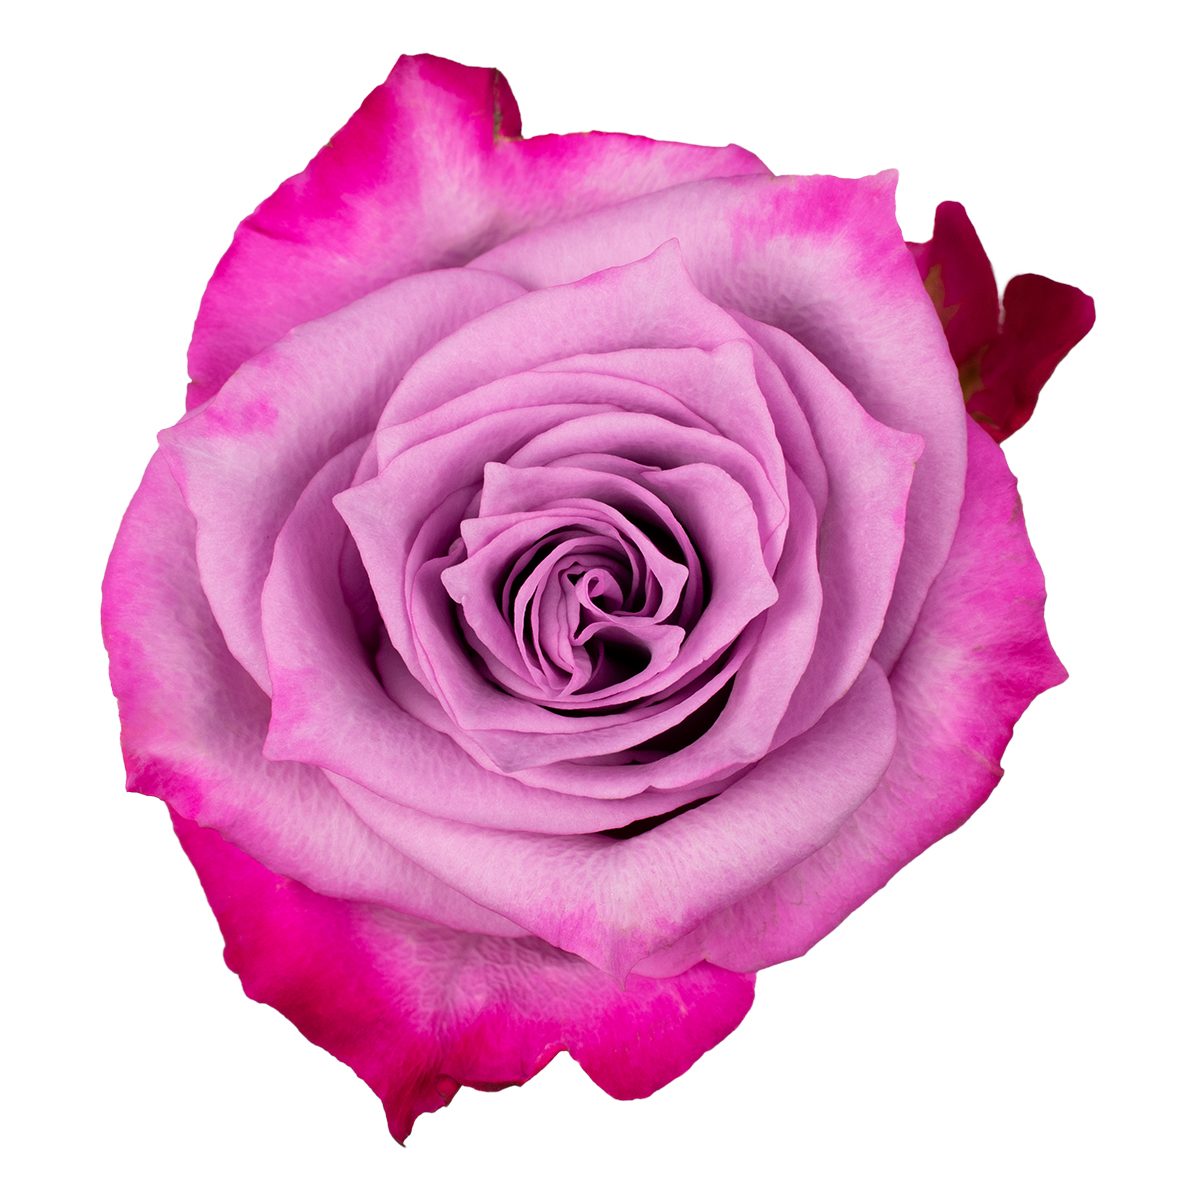 DEEP PURPLE rose - Florist Rose Paradise! - Decofresh TOTF2020 on Thursd